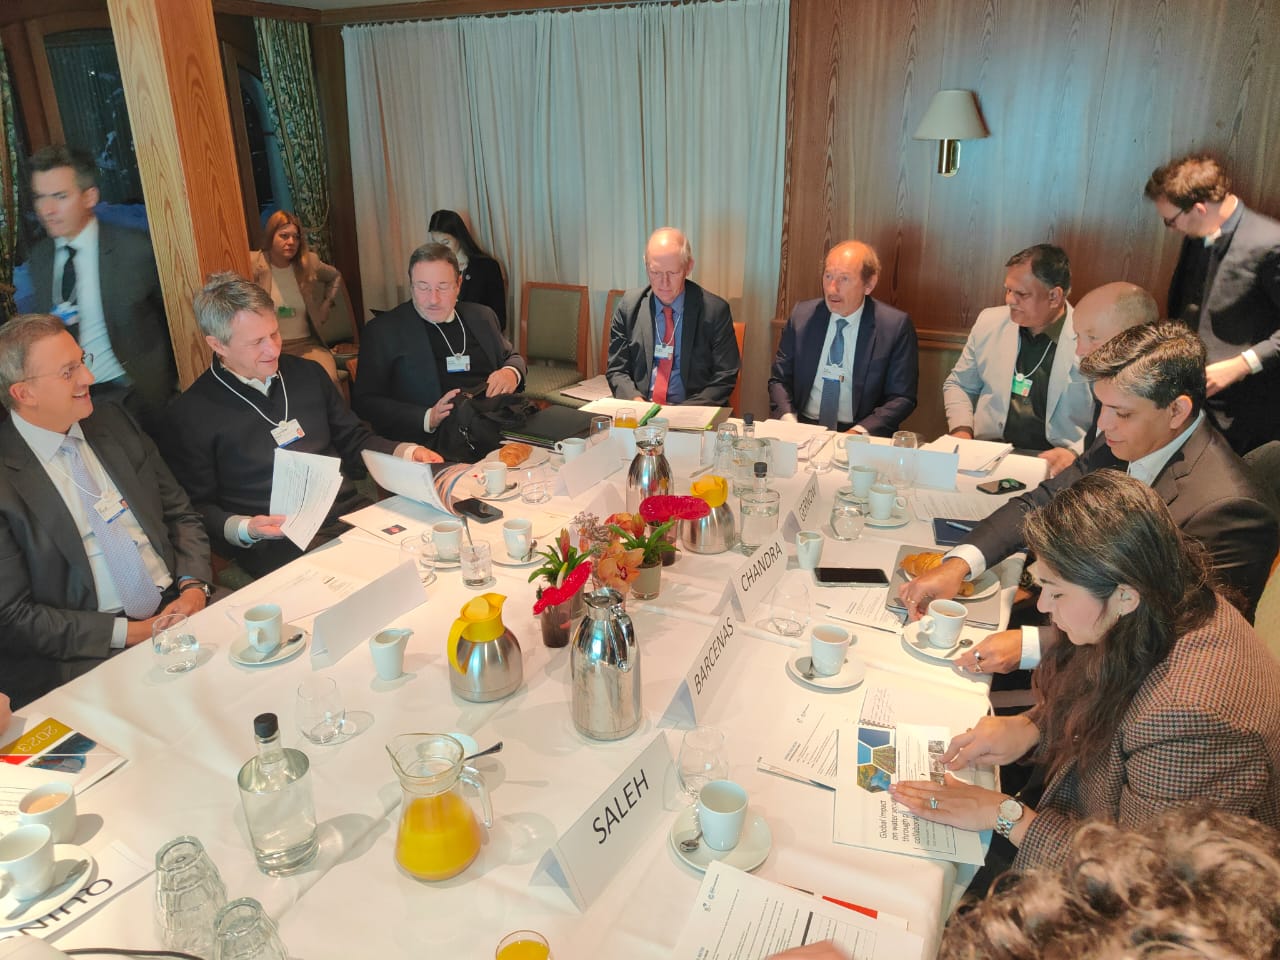 2030 WRG Governing Council endorses strategy refresh at Davos meeting